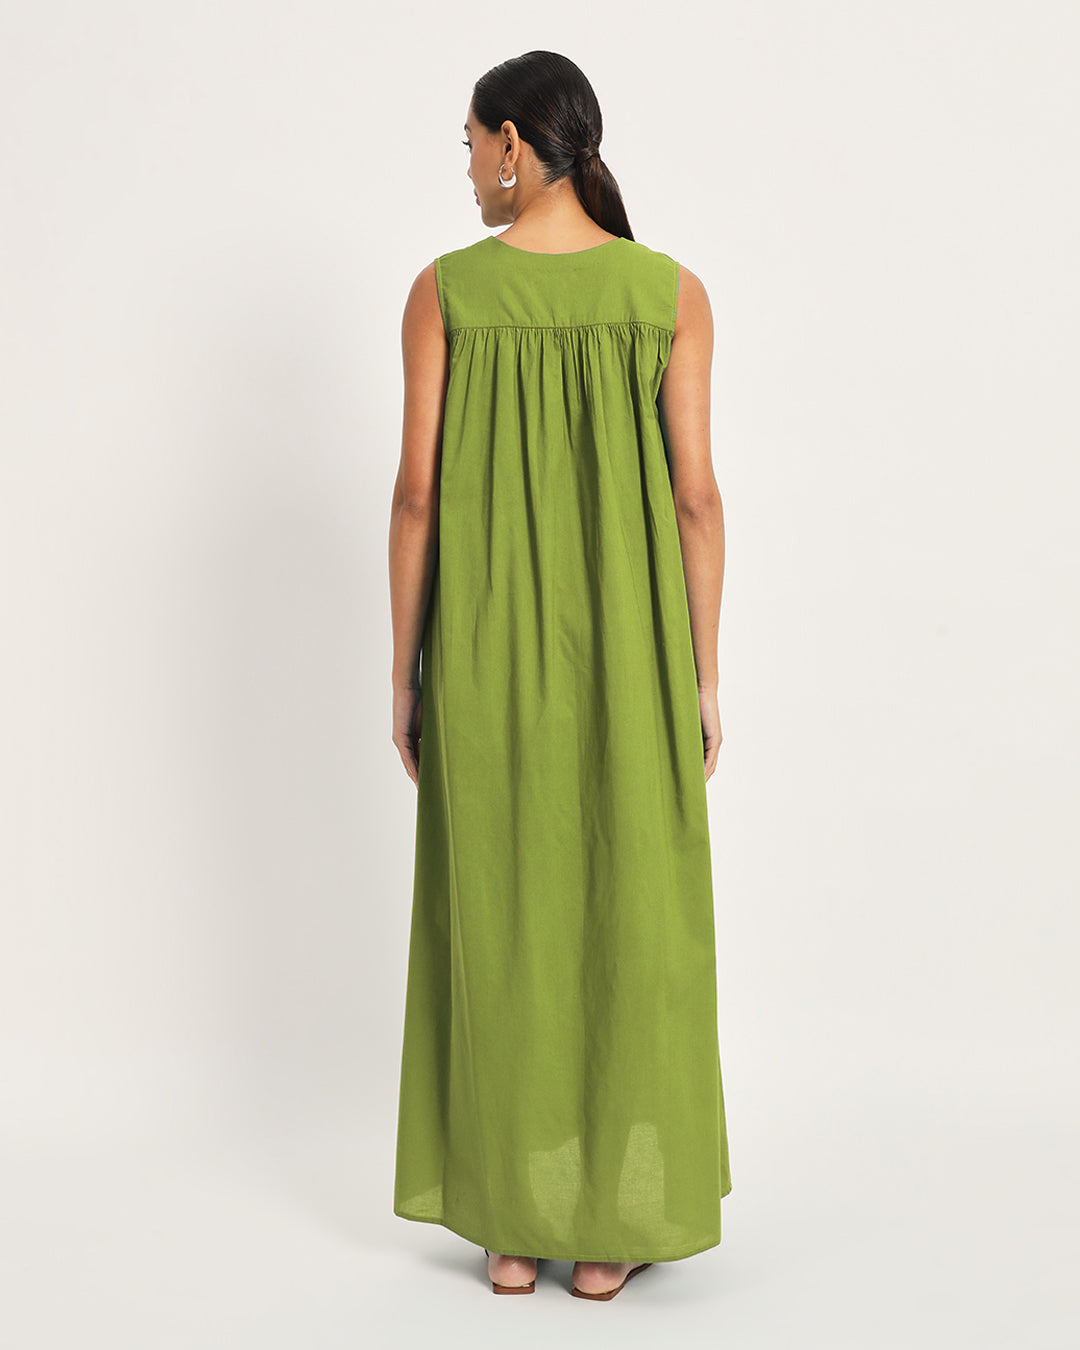 Combo: Lilac & Sage Green Restful Retreat Nightdress